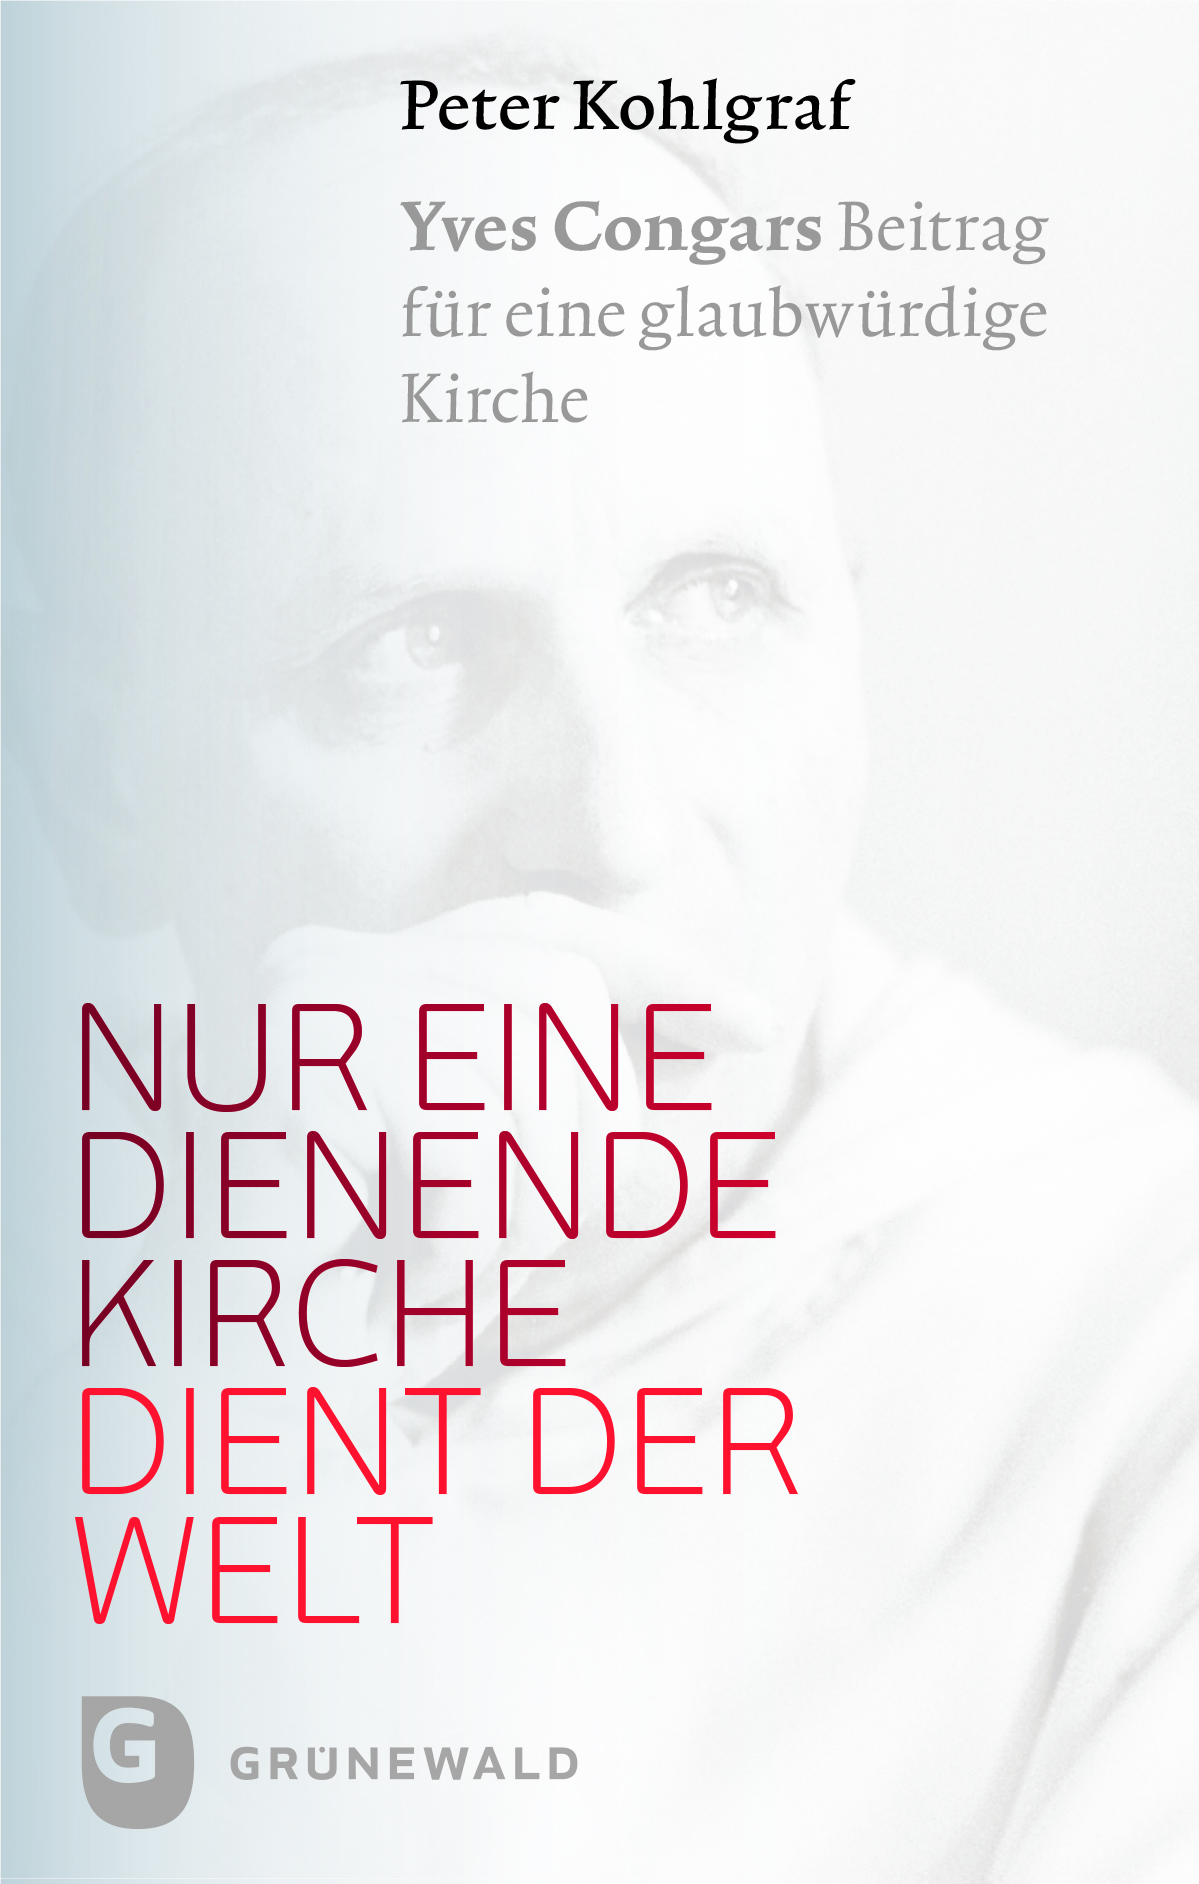 Buch Kohlgraf Yves Congard (c) Grünewald-Verlag Mainz